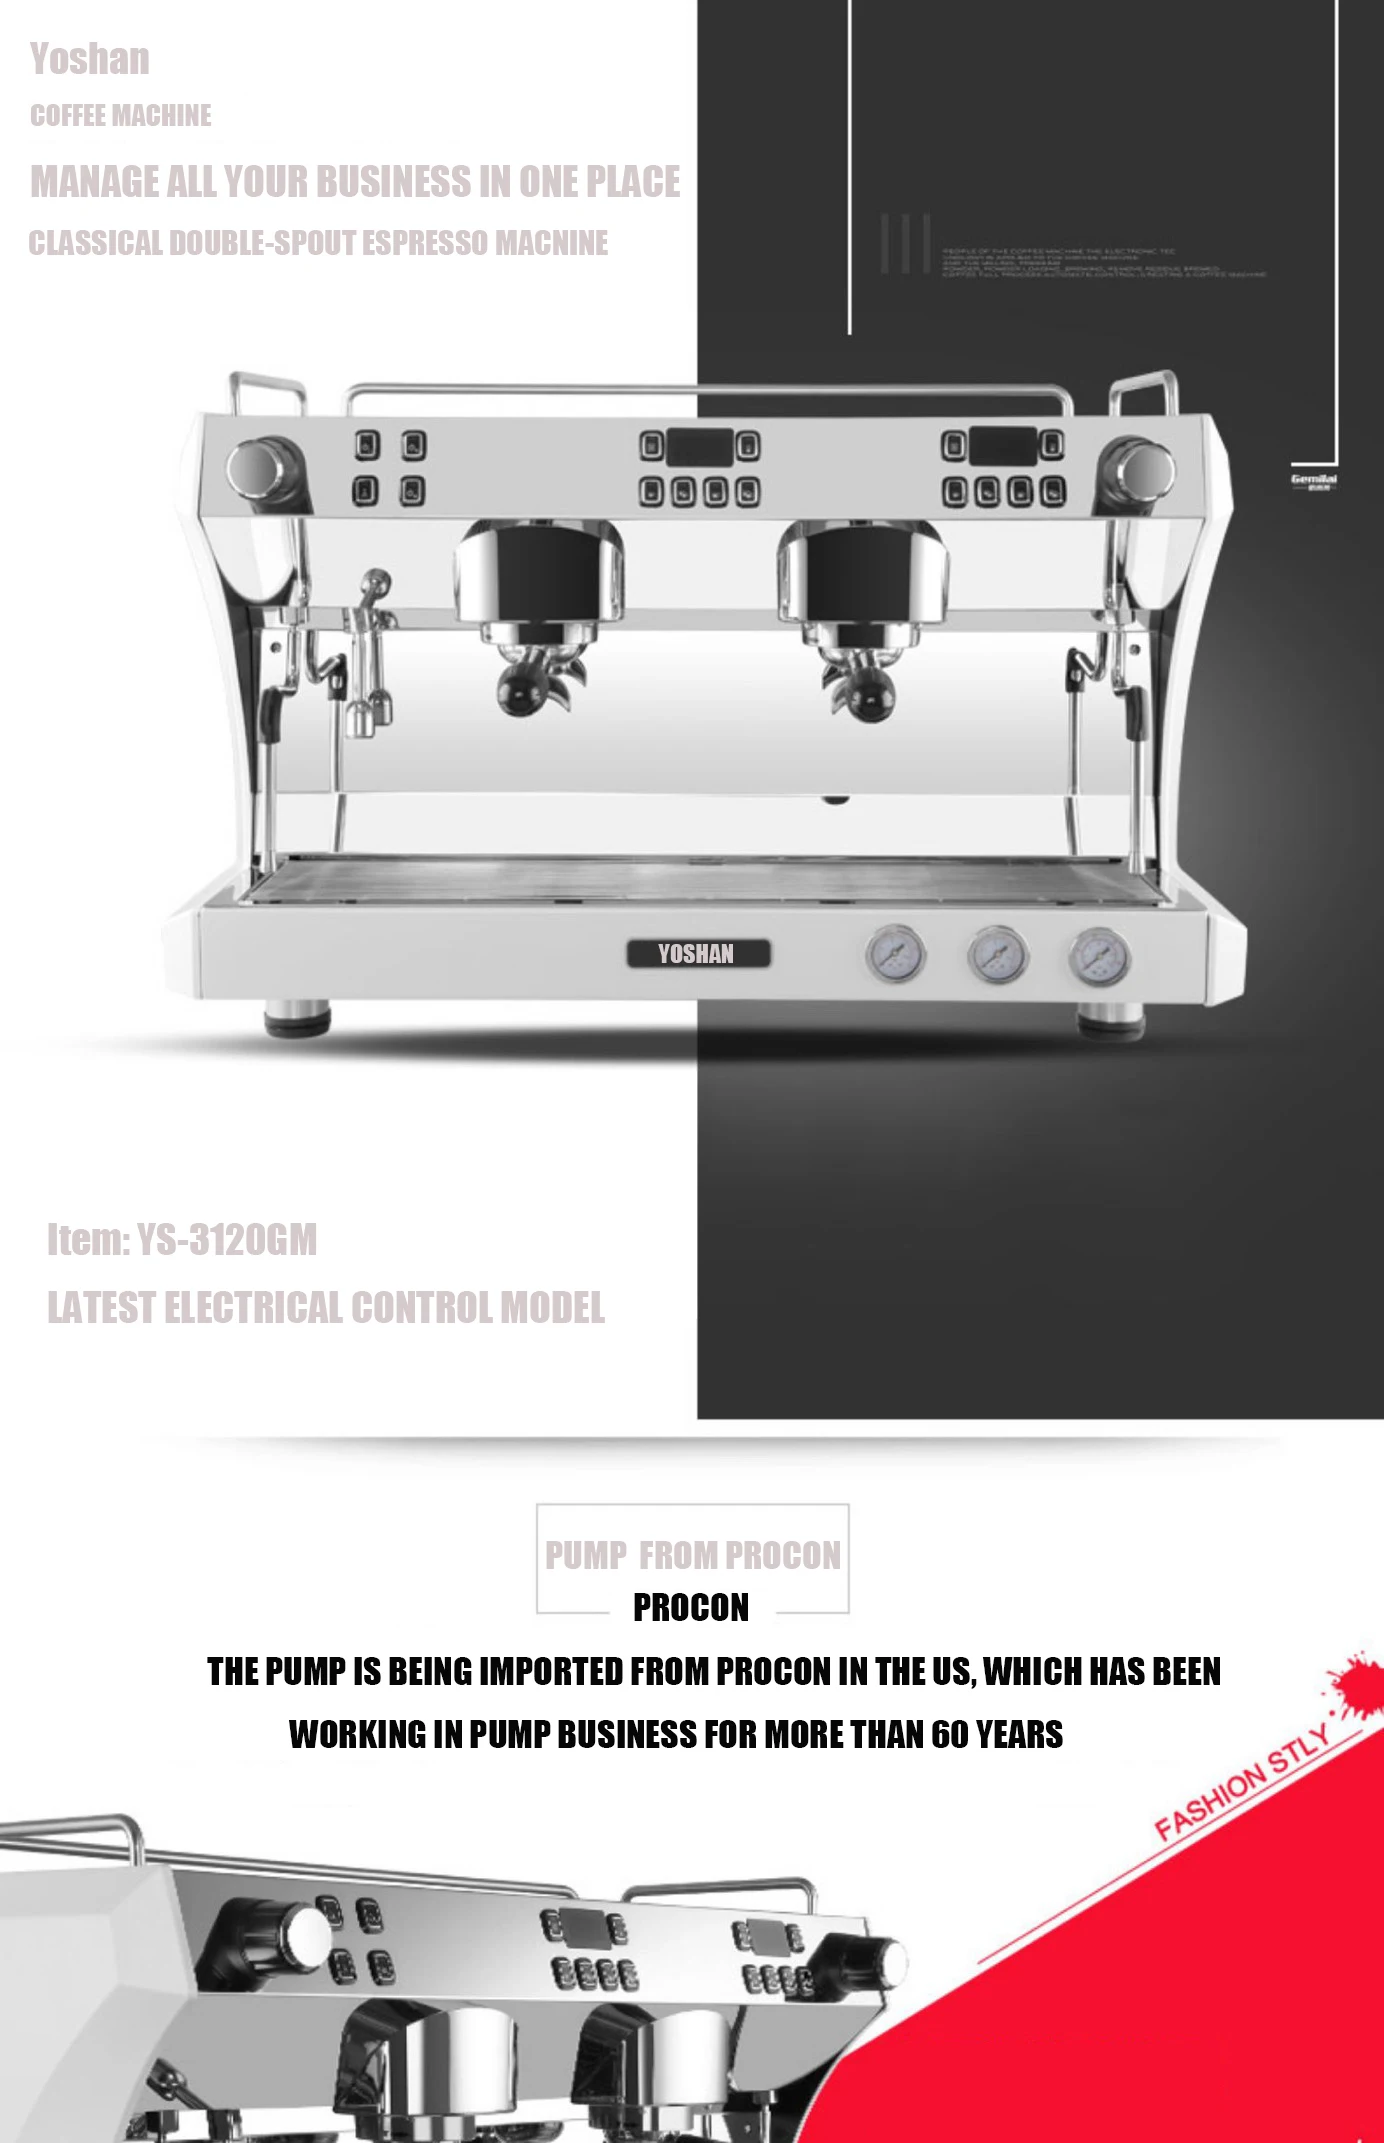 Professional China Automatic Commercial Coffee Maker Barista Espresso Coffee Machine For Sale